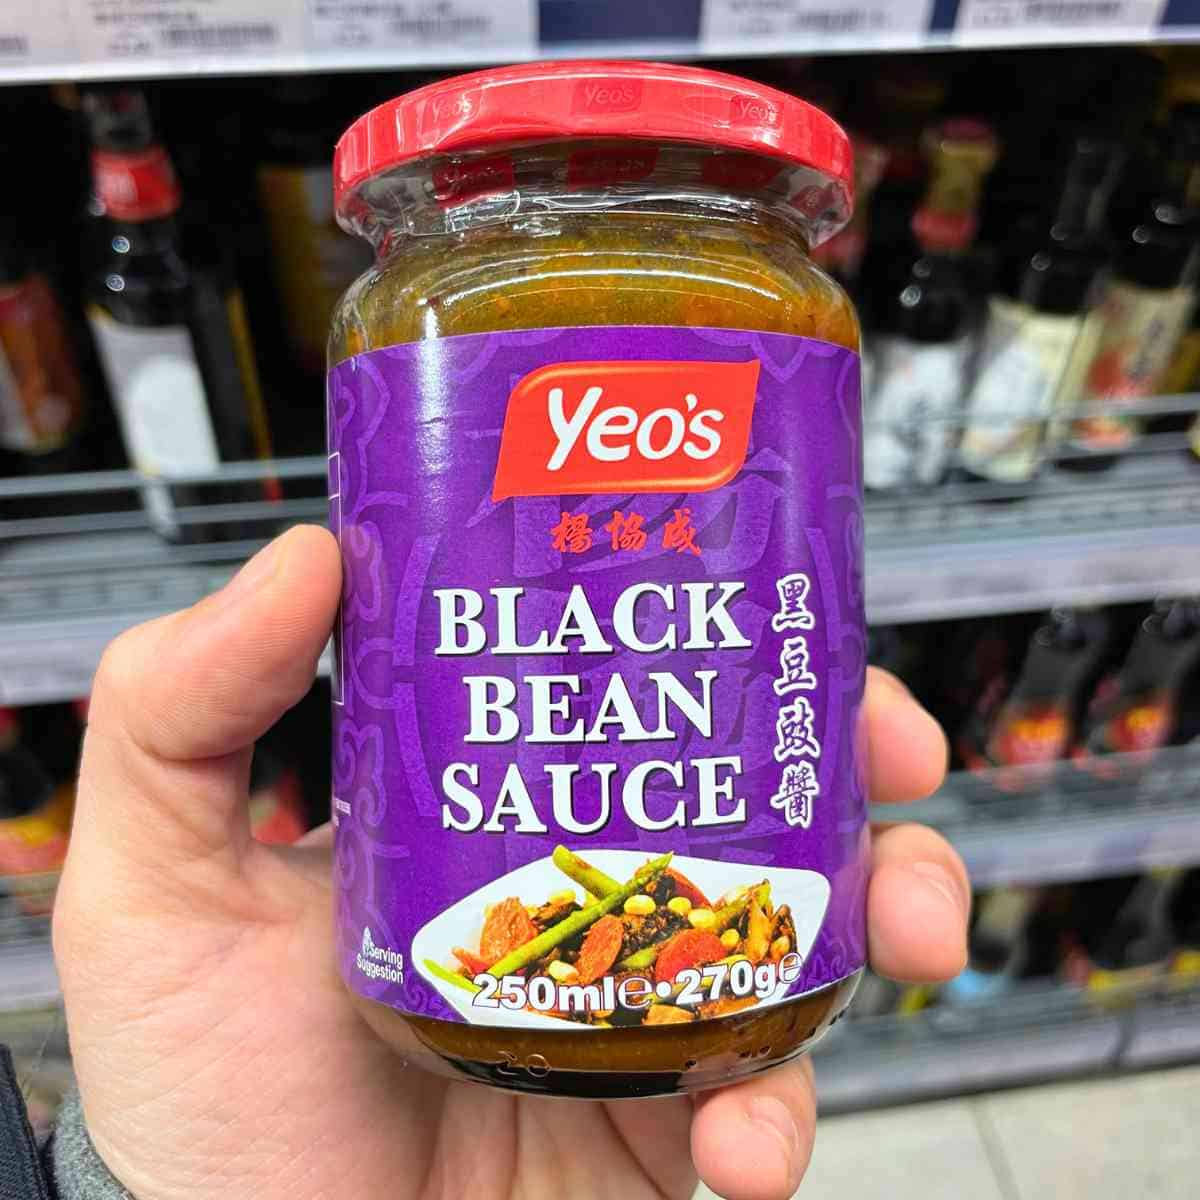 Premade black bean sauce